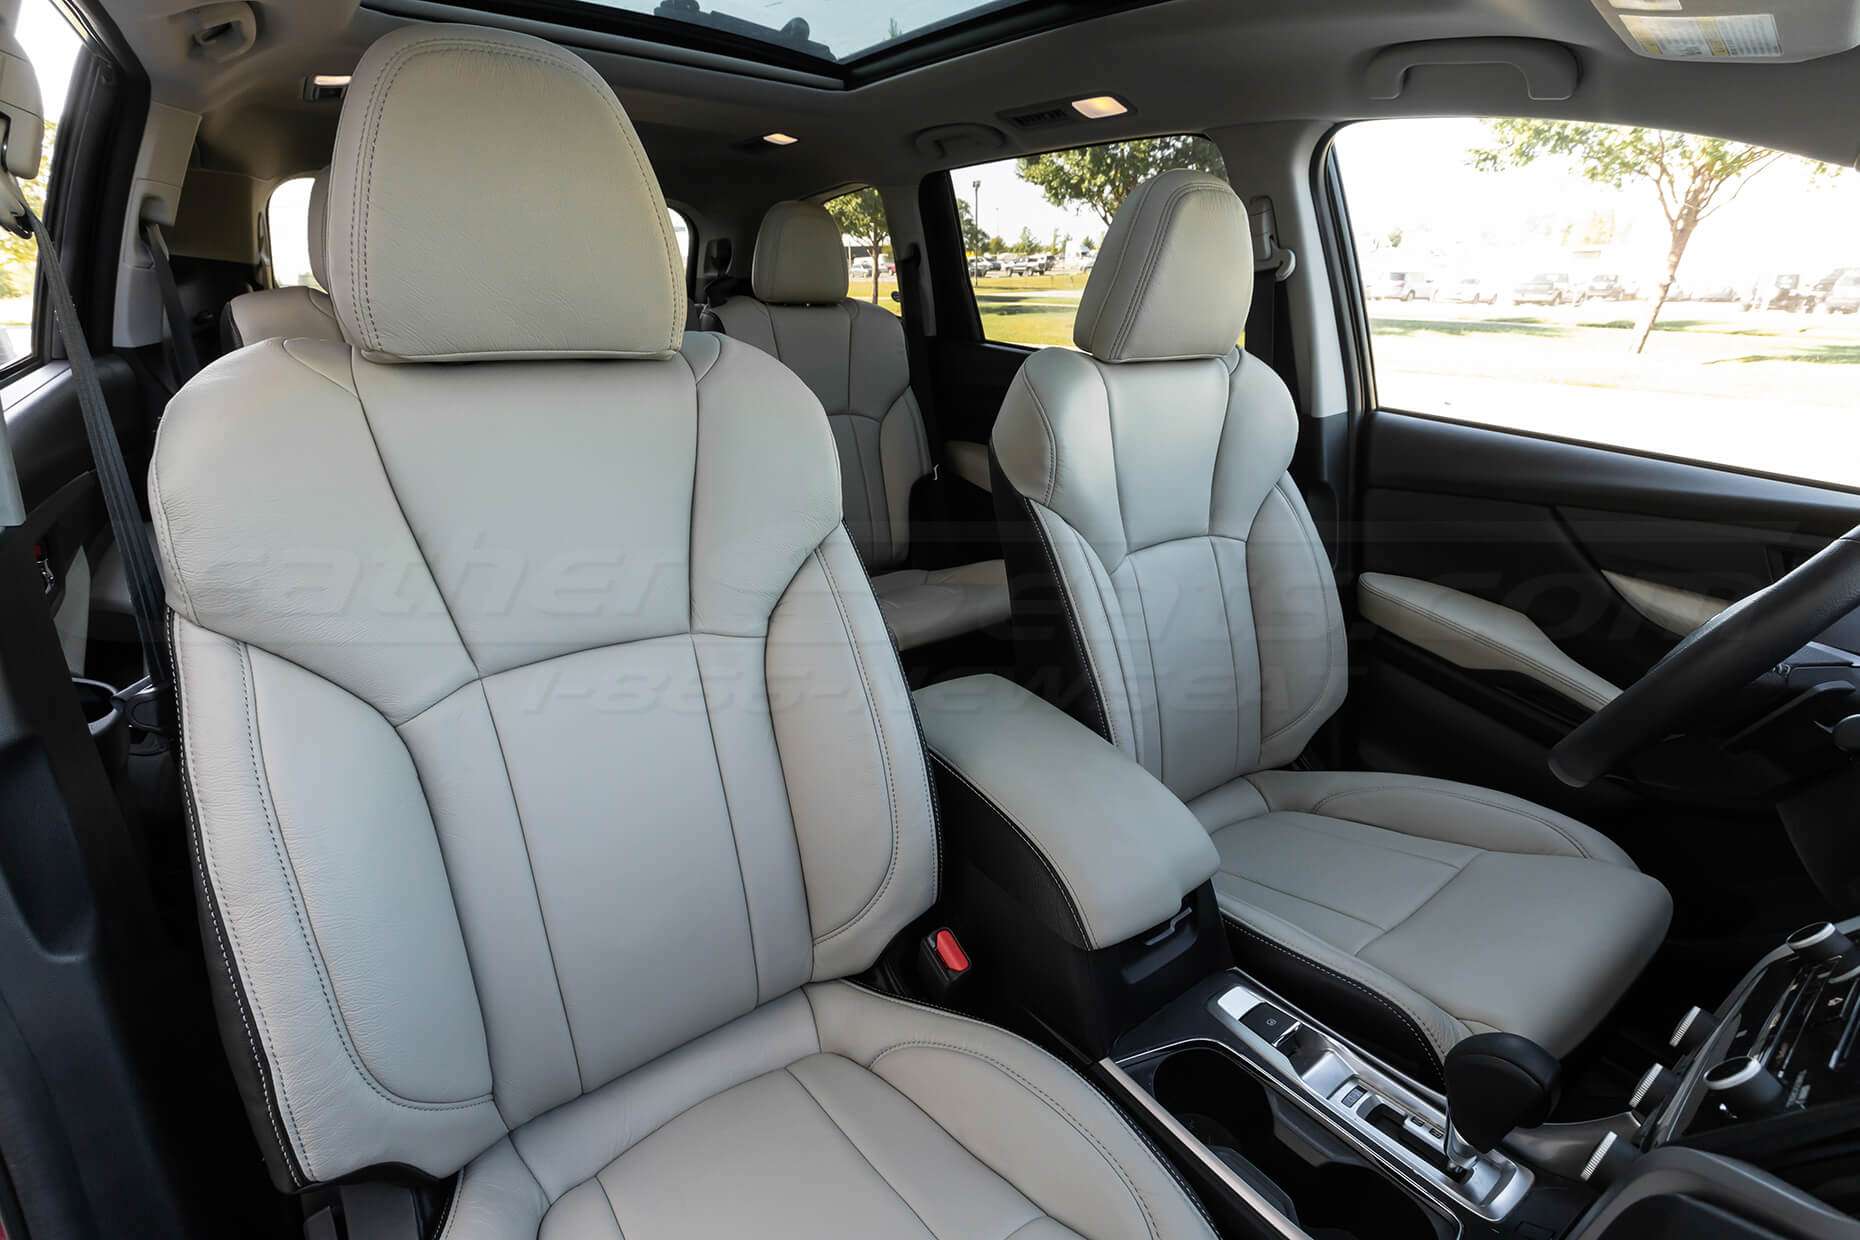 Subaru Ascen leather seats - front backrest up